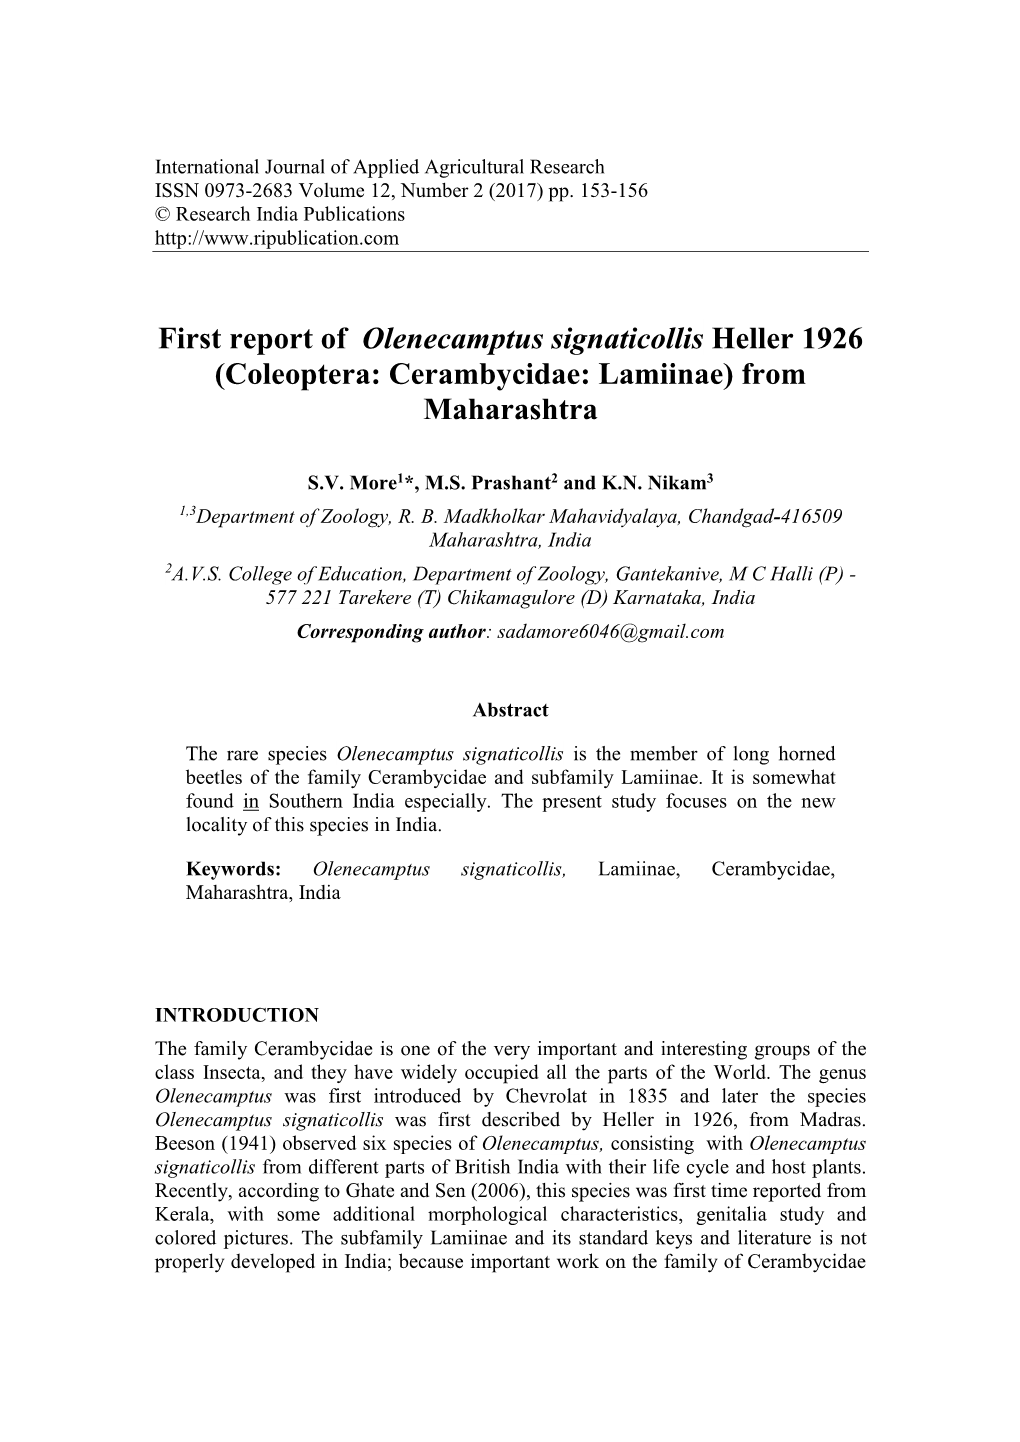 First Report of Olenecamptus Signaticollis Heller 1926 (Coleoptera: Cerambycidae: Lamiinae) from Maharashtra